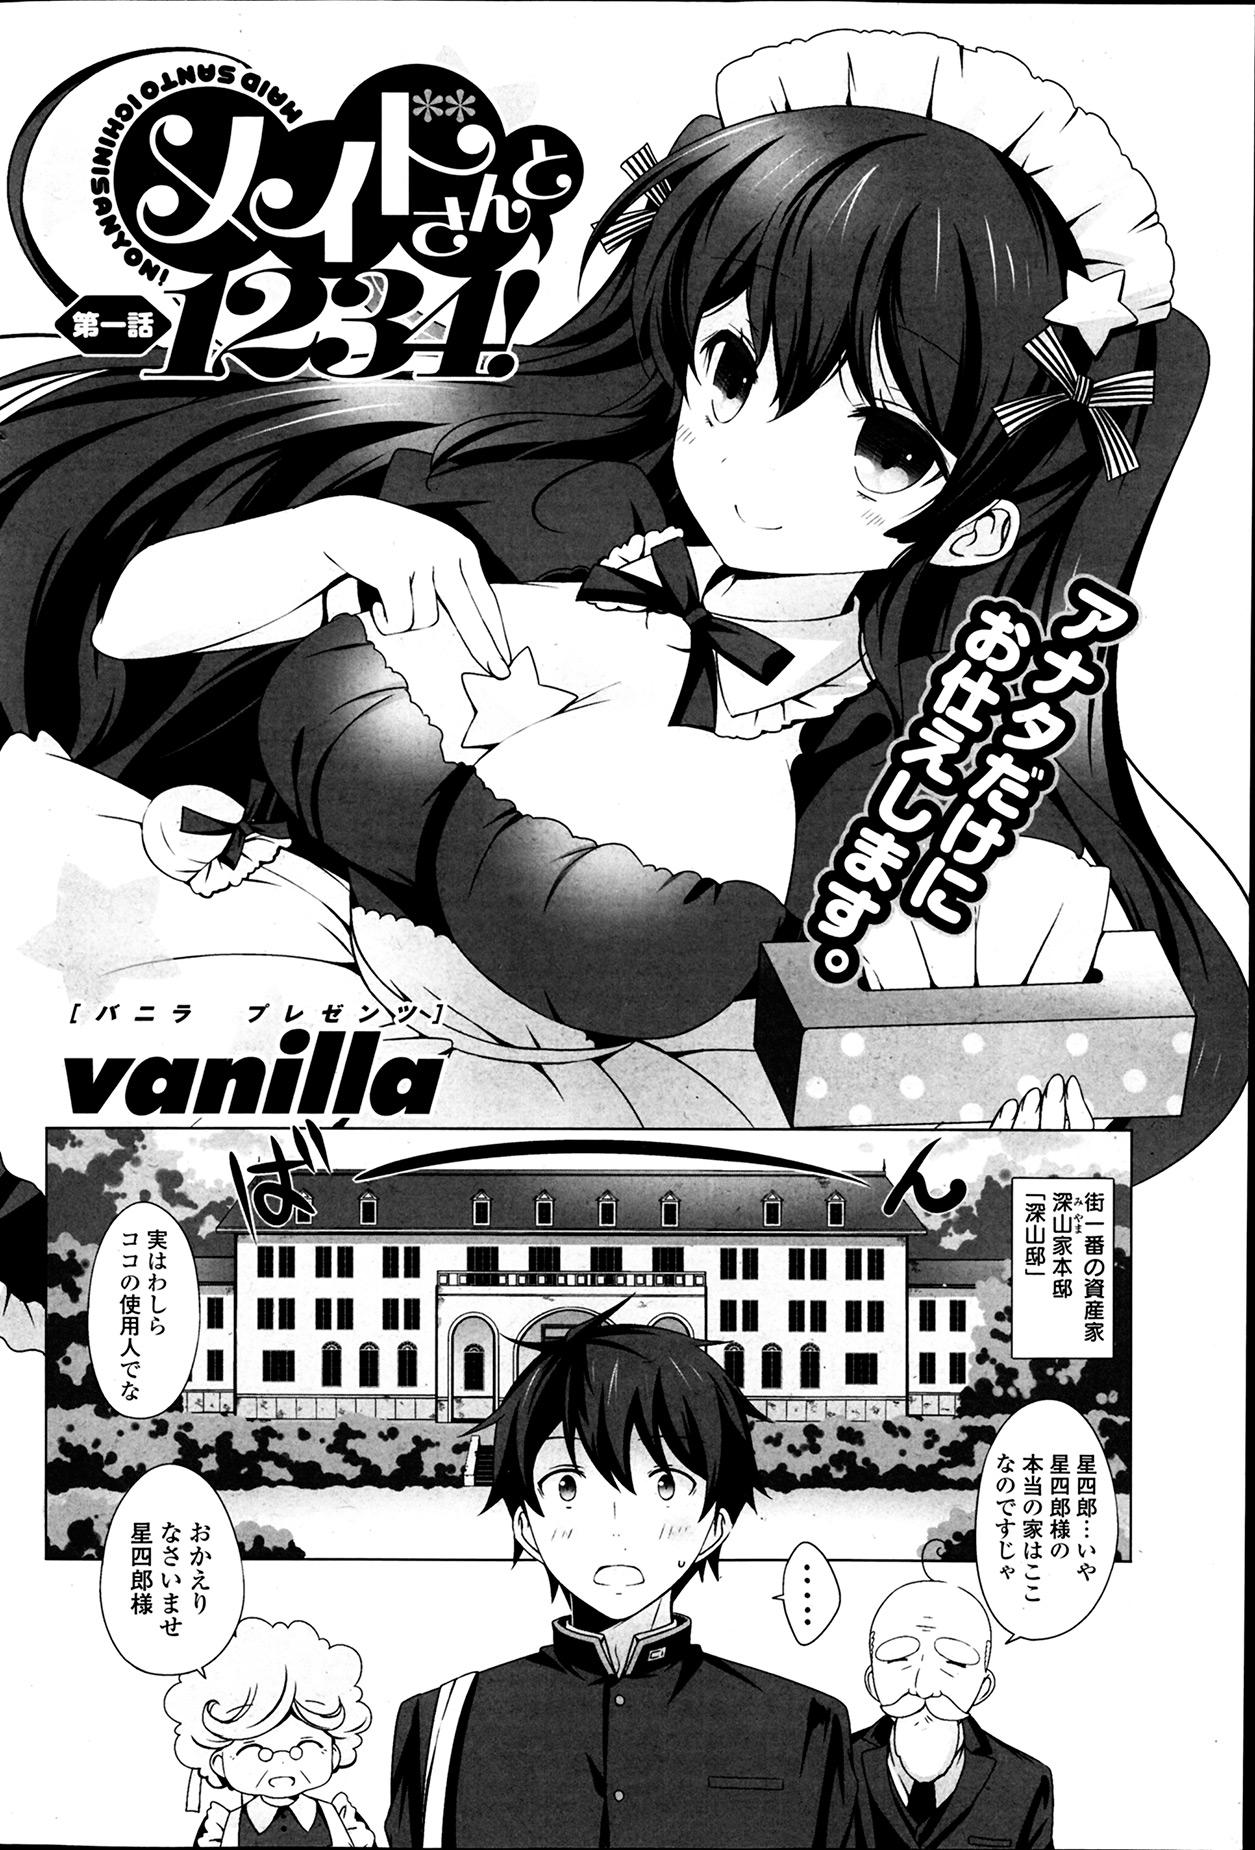 [Vanilla] Maid-san to 1234! Ch.1-3 1